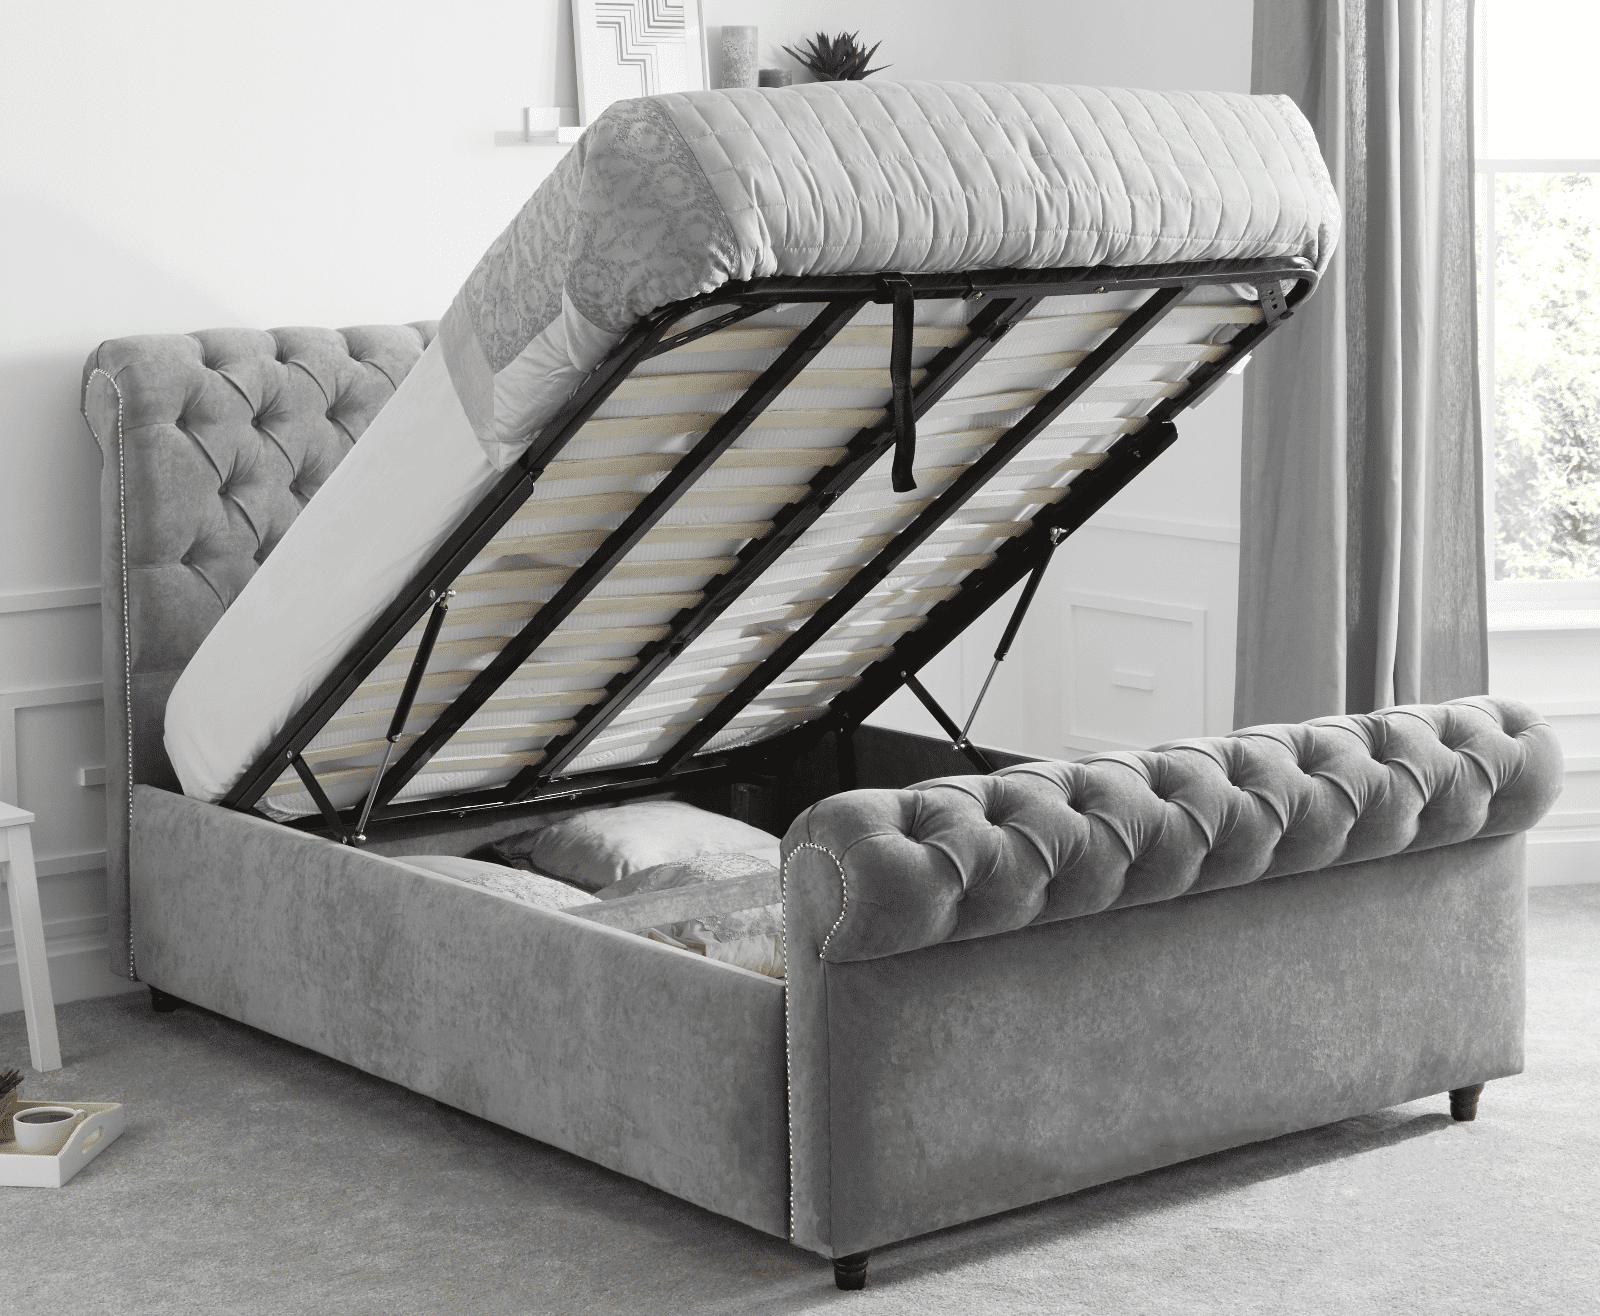 rreplacment folding mattress for castro ottoman bed